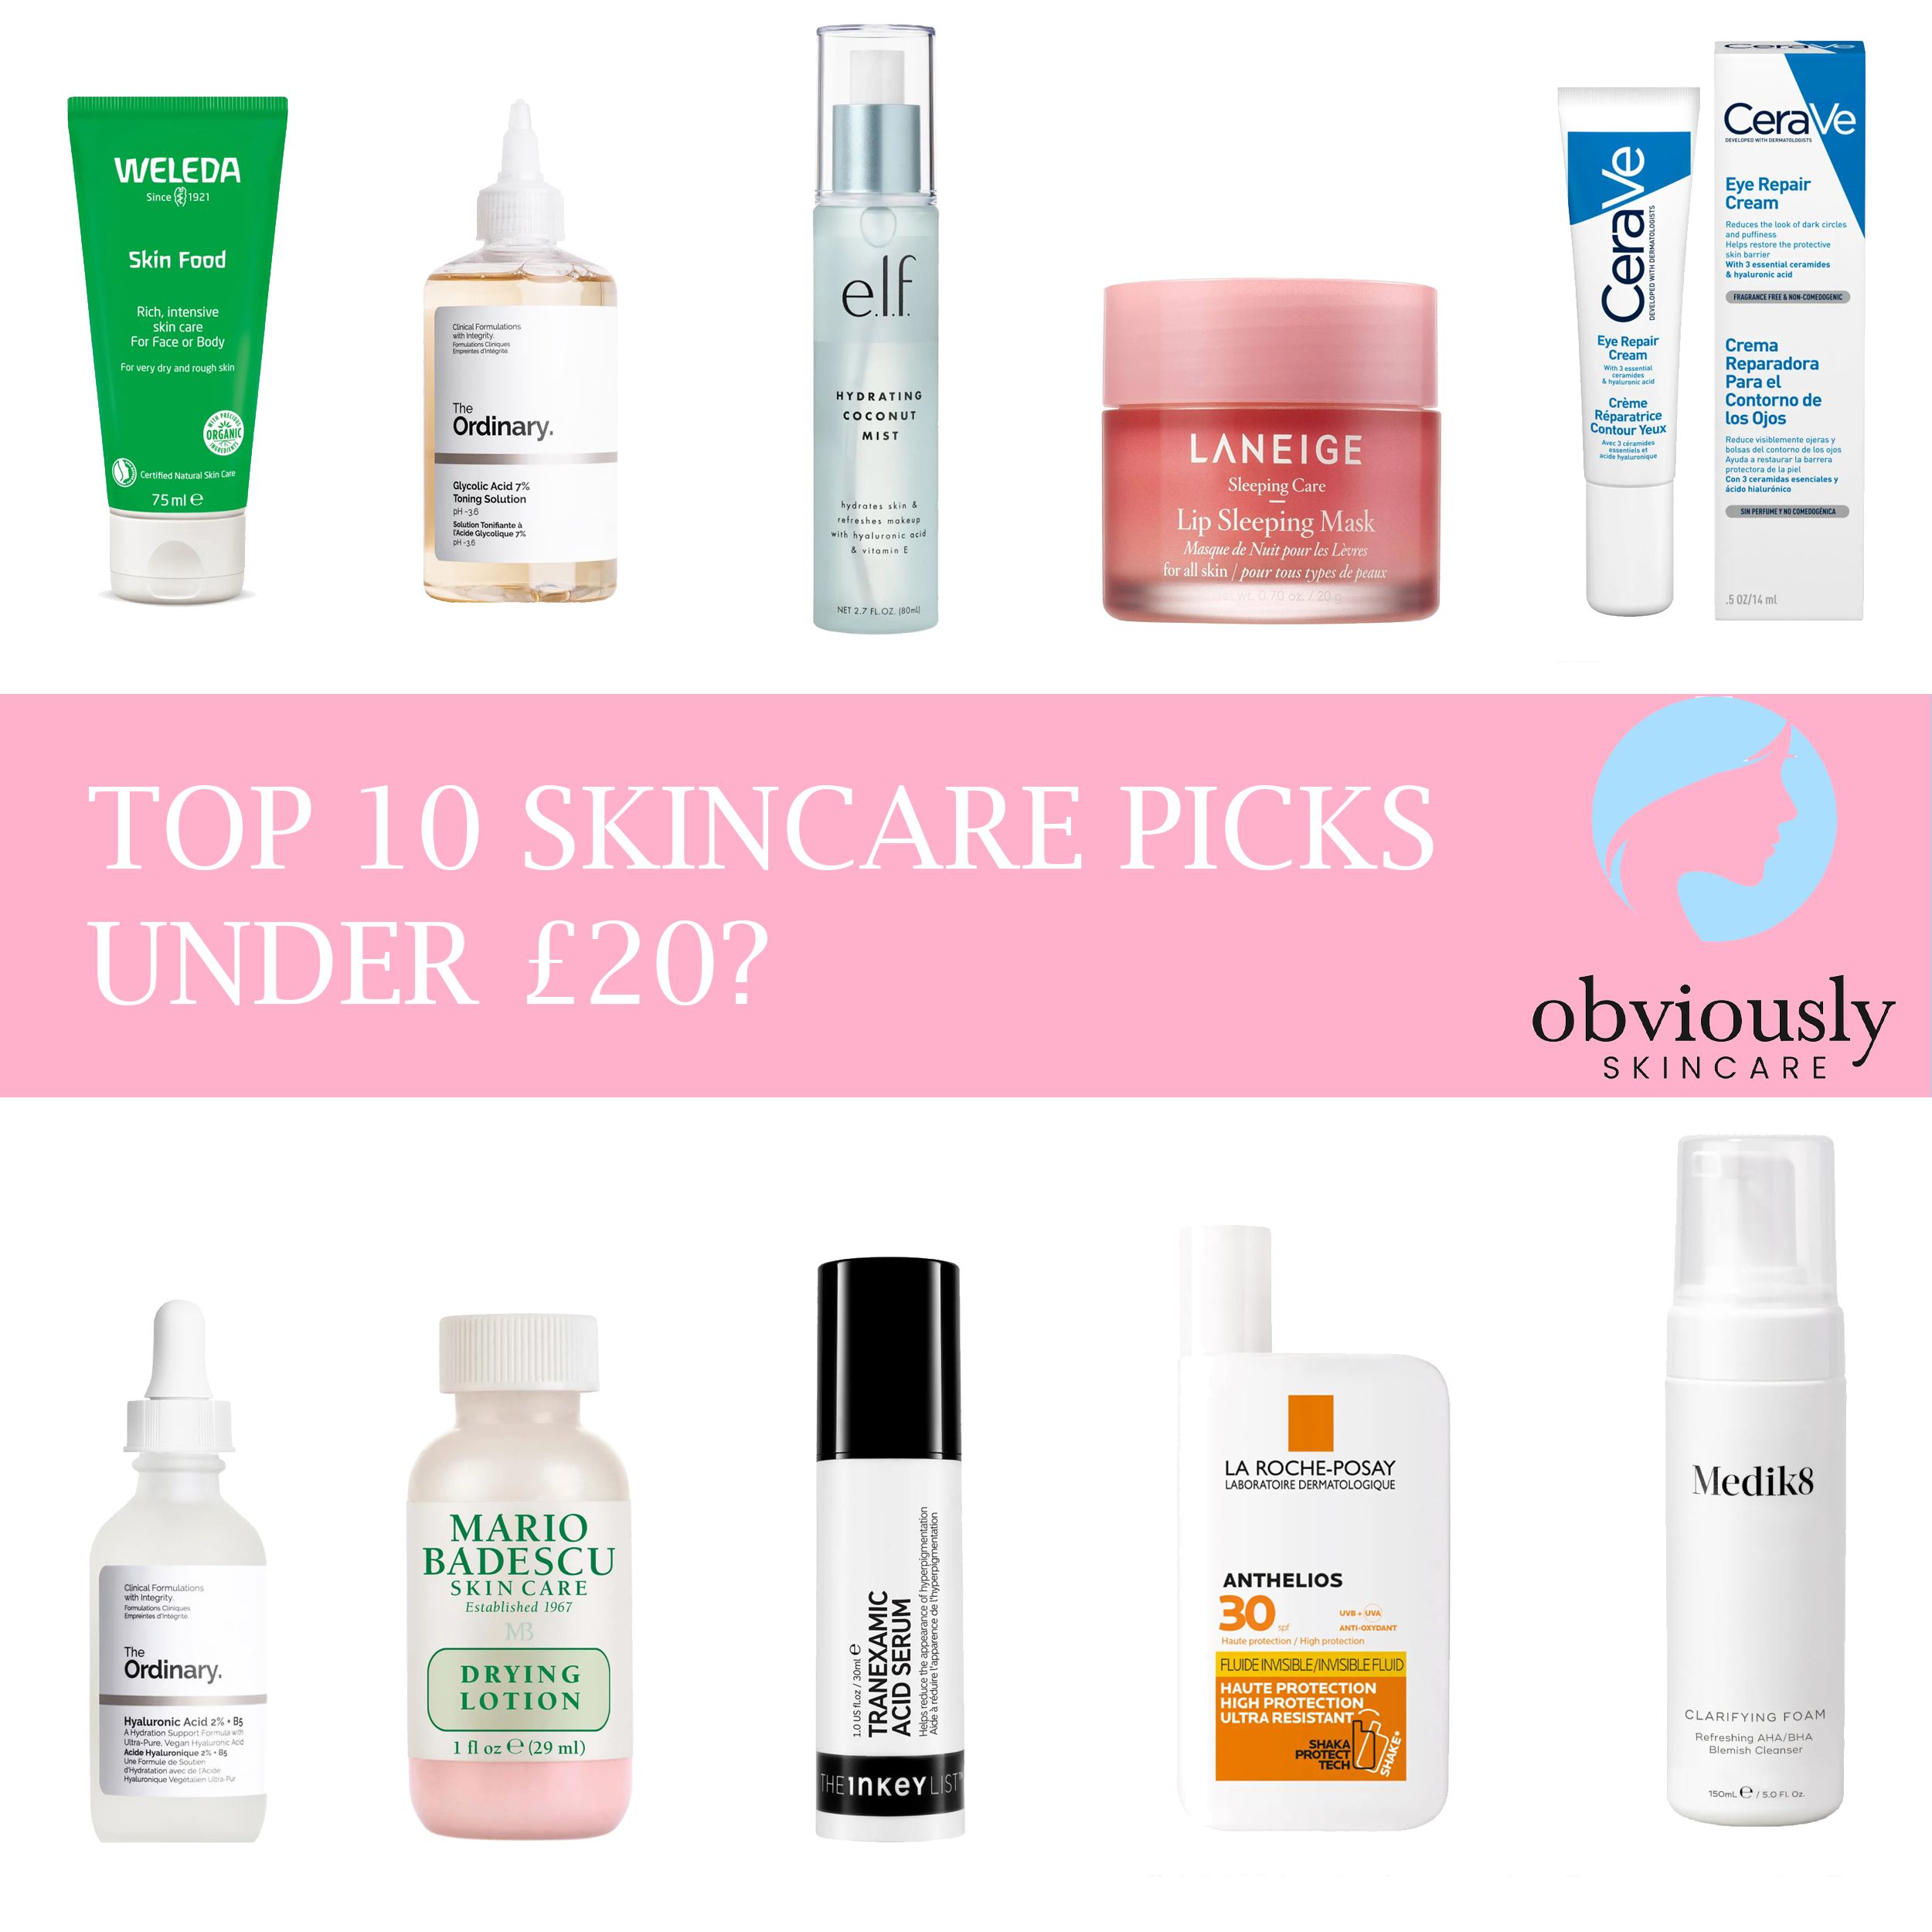 Top Ten Skincare Picks Under £20 in order